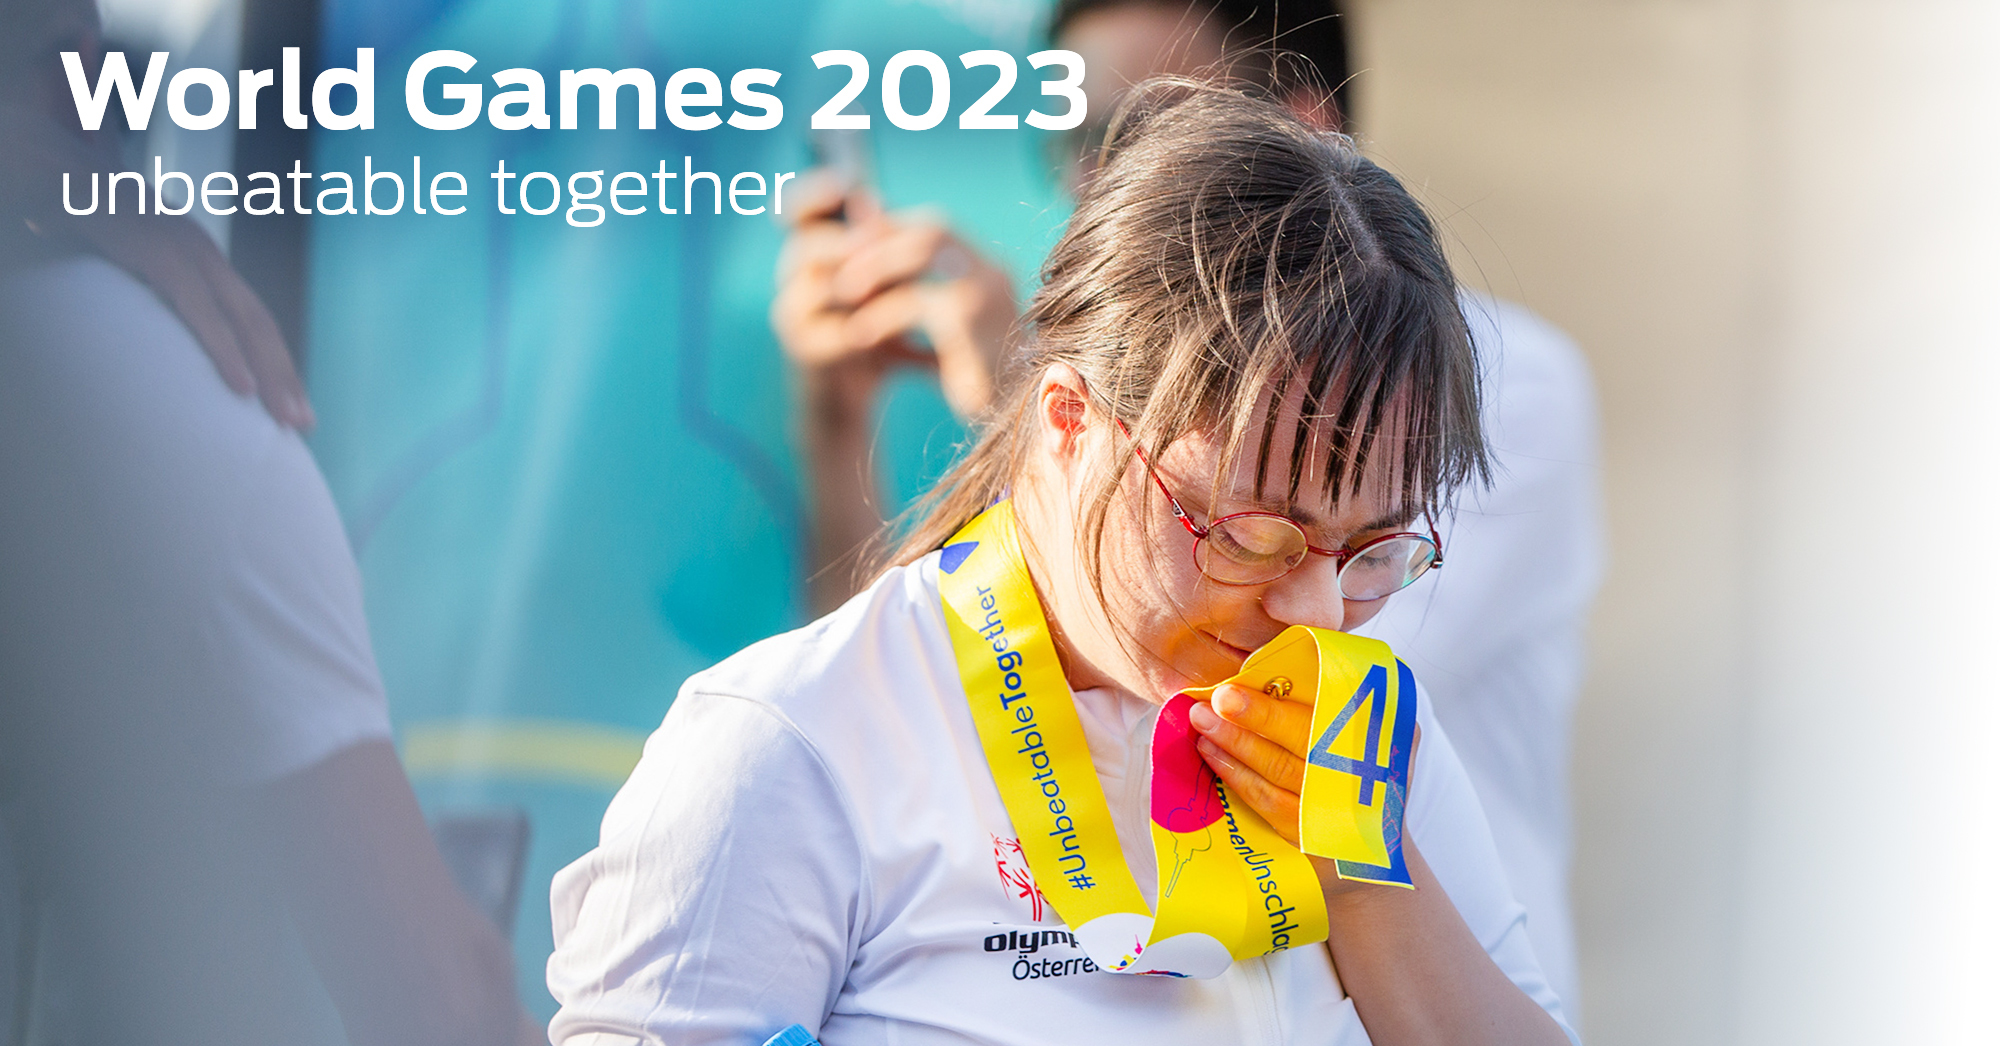 Special Olympics Berlin - World Games 2023: Veni, vidi, vici für Österreich